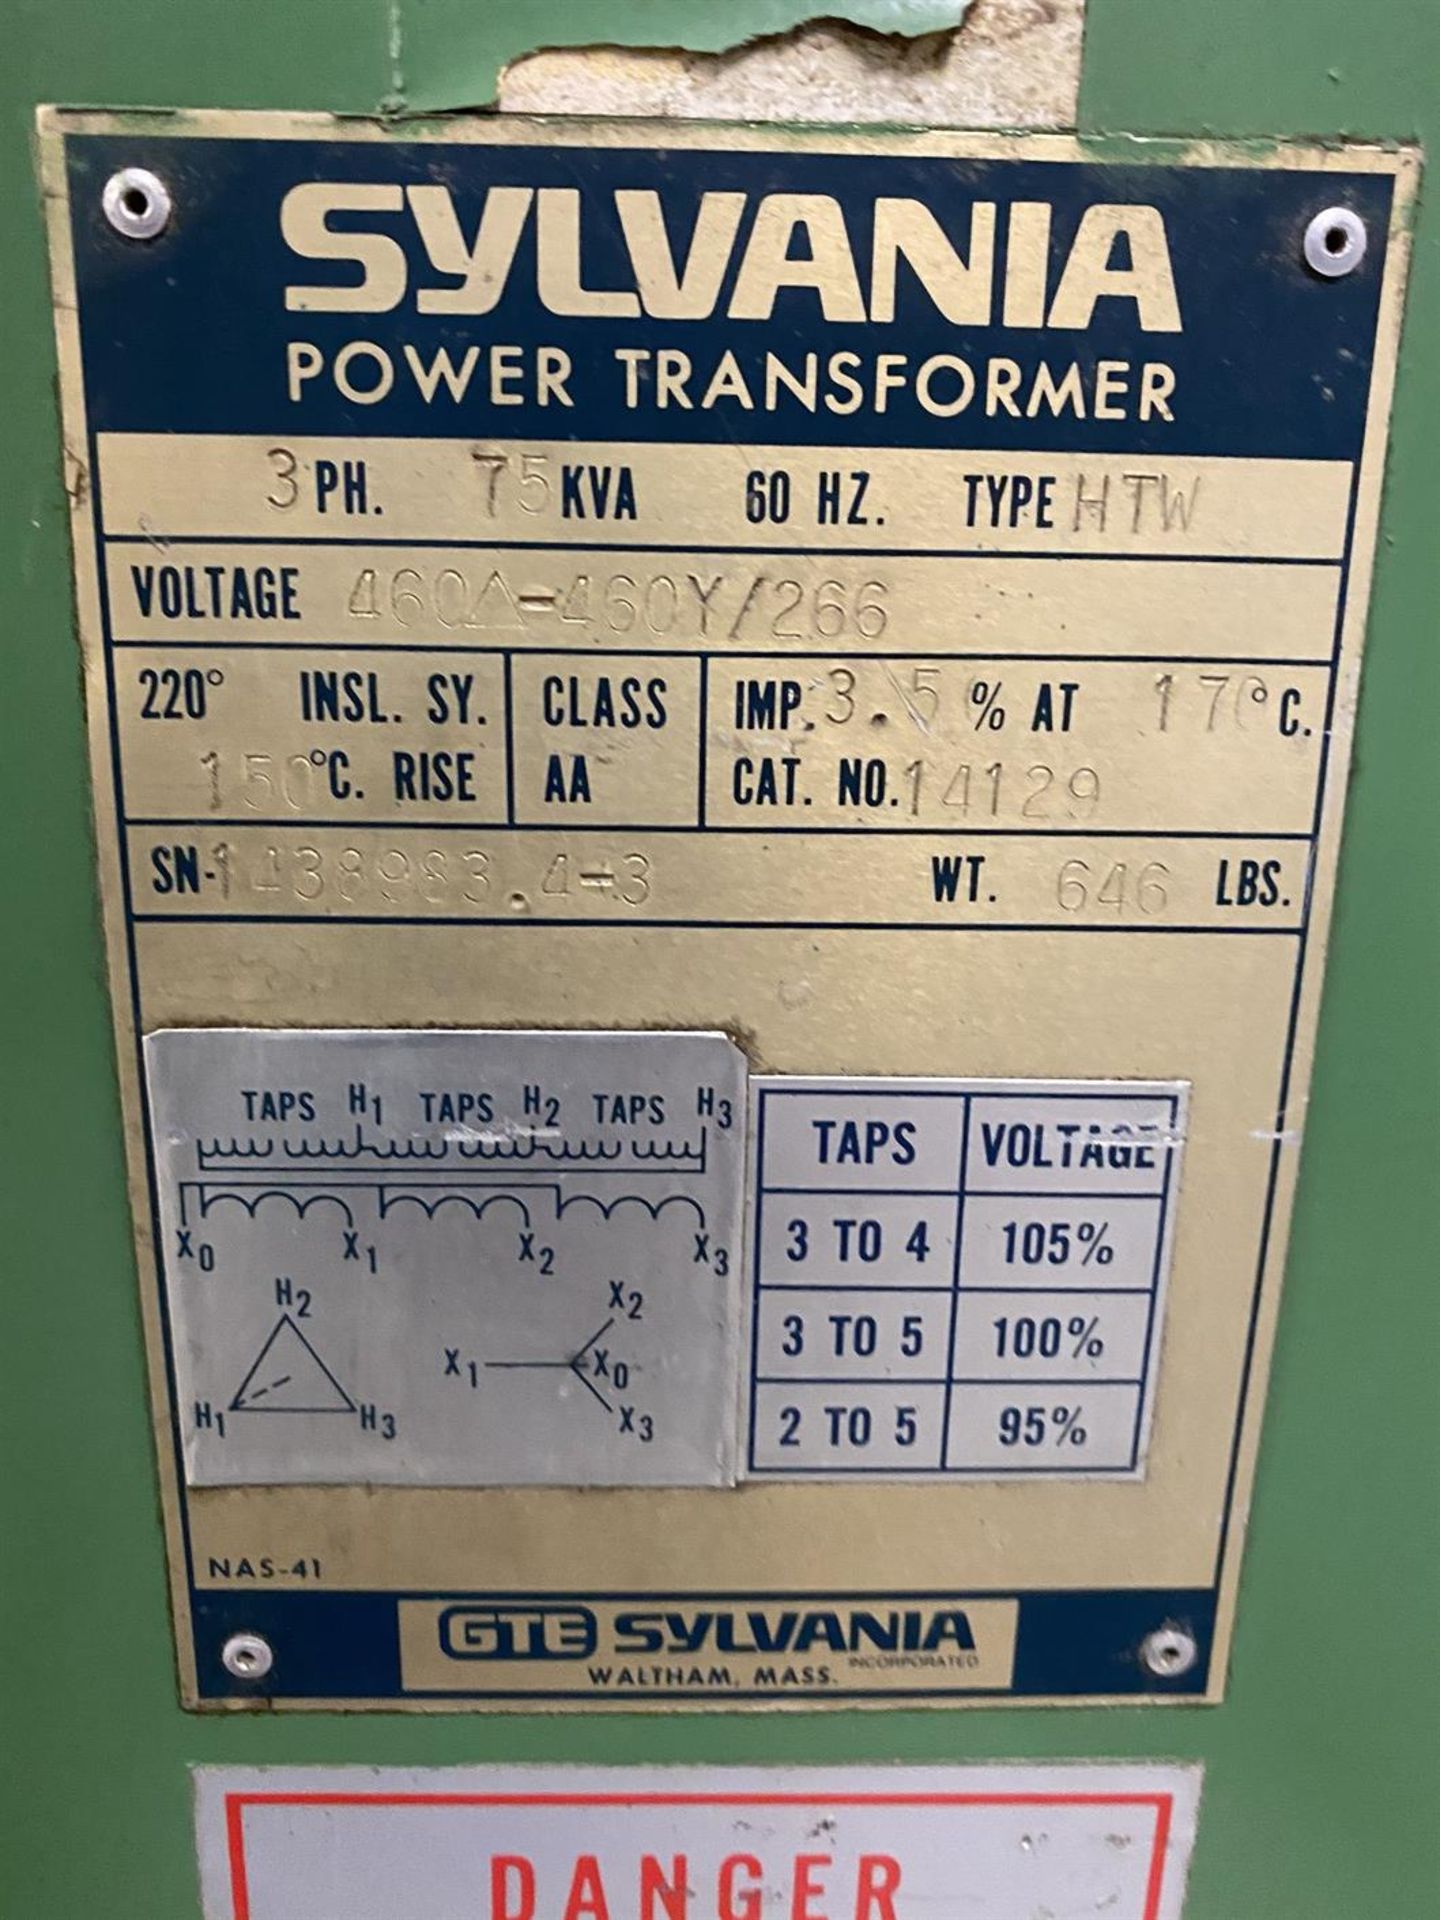 SYLVANIA 75 KVA Power Transformer - Image 2 of 2